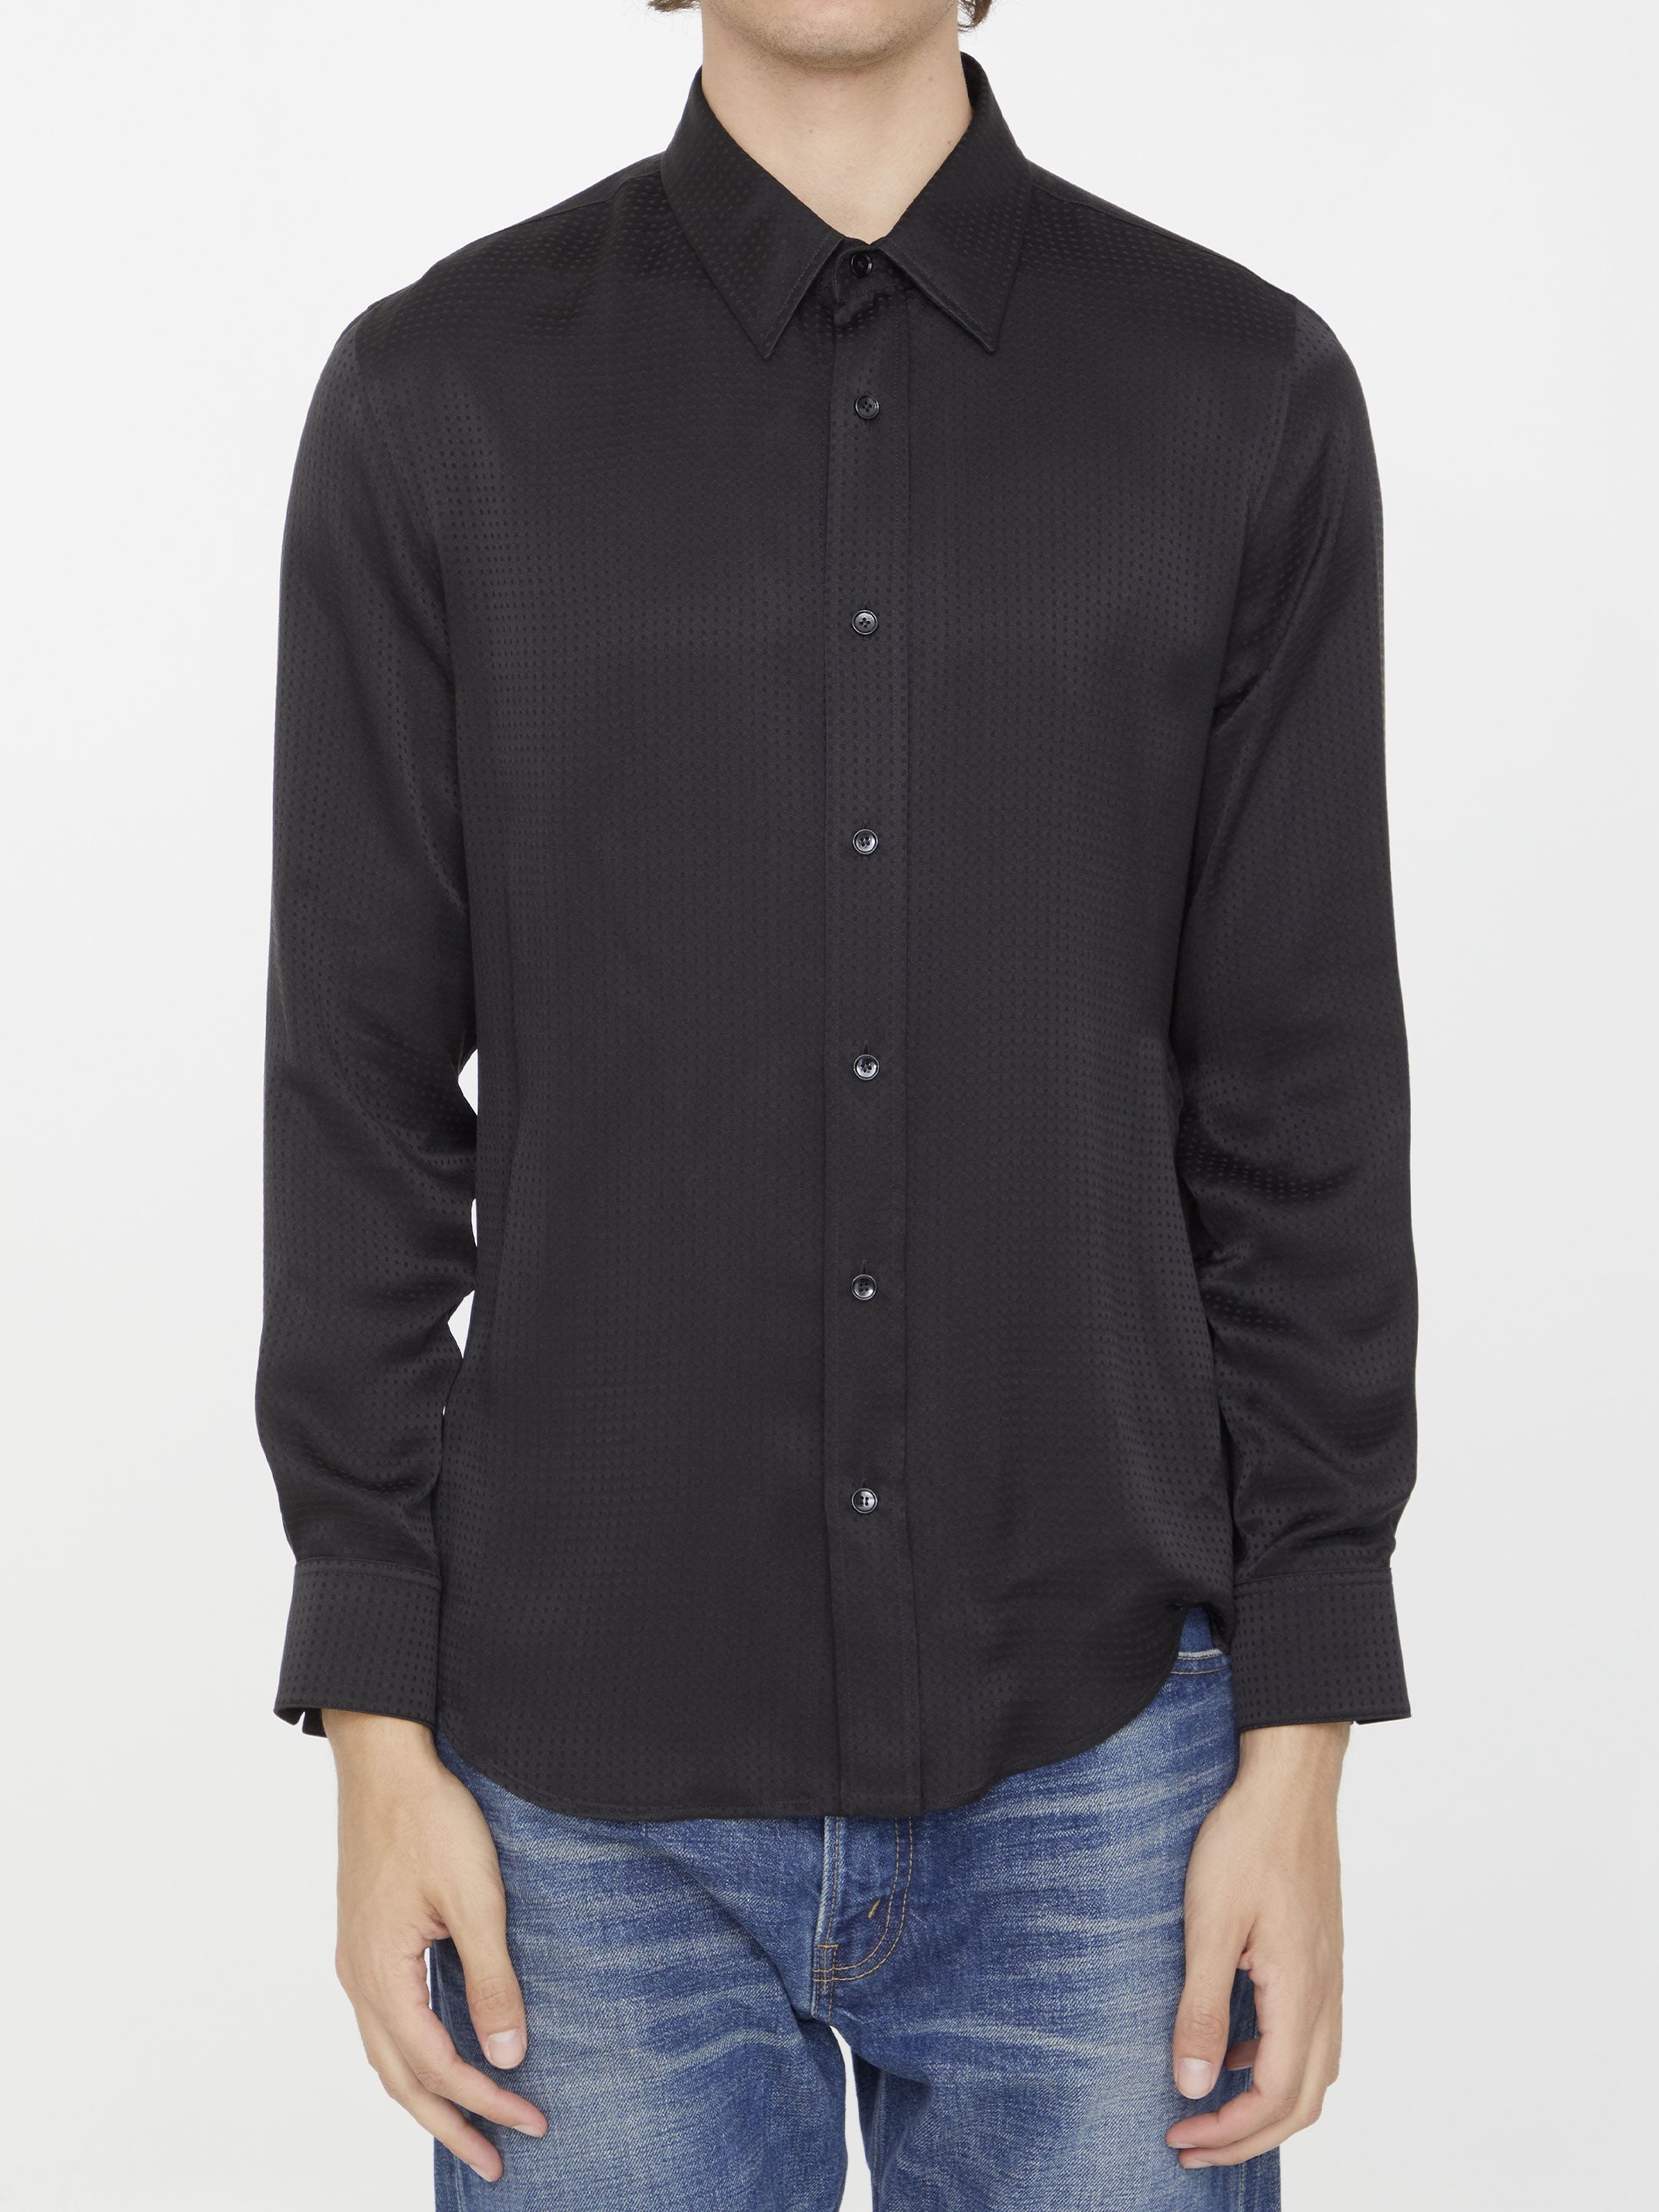 CELINE-OUTLET-SALE-Black-silk-shirt-Shirts-38-BLACK-ARCHIVE-COLLECTION.jpg